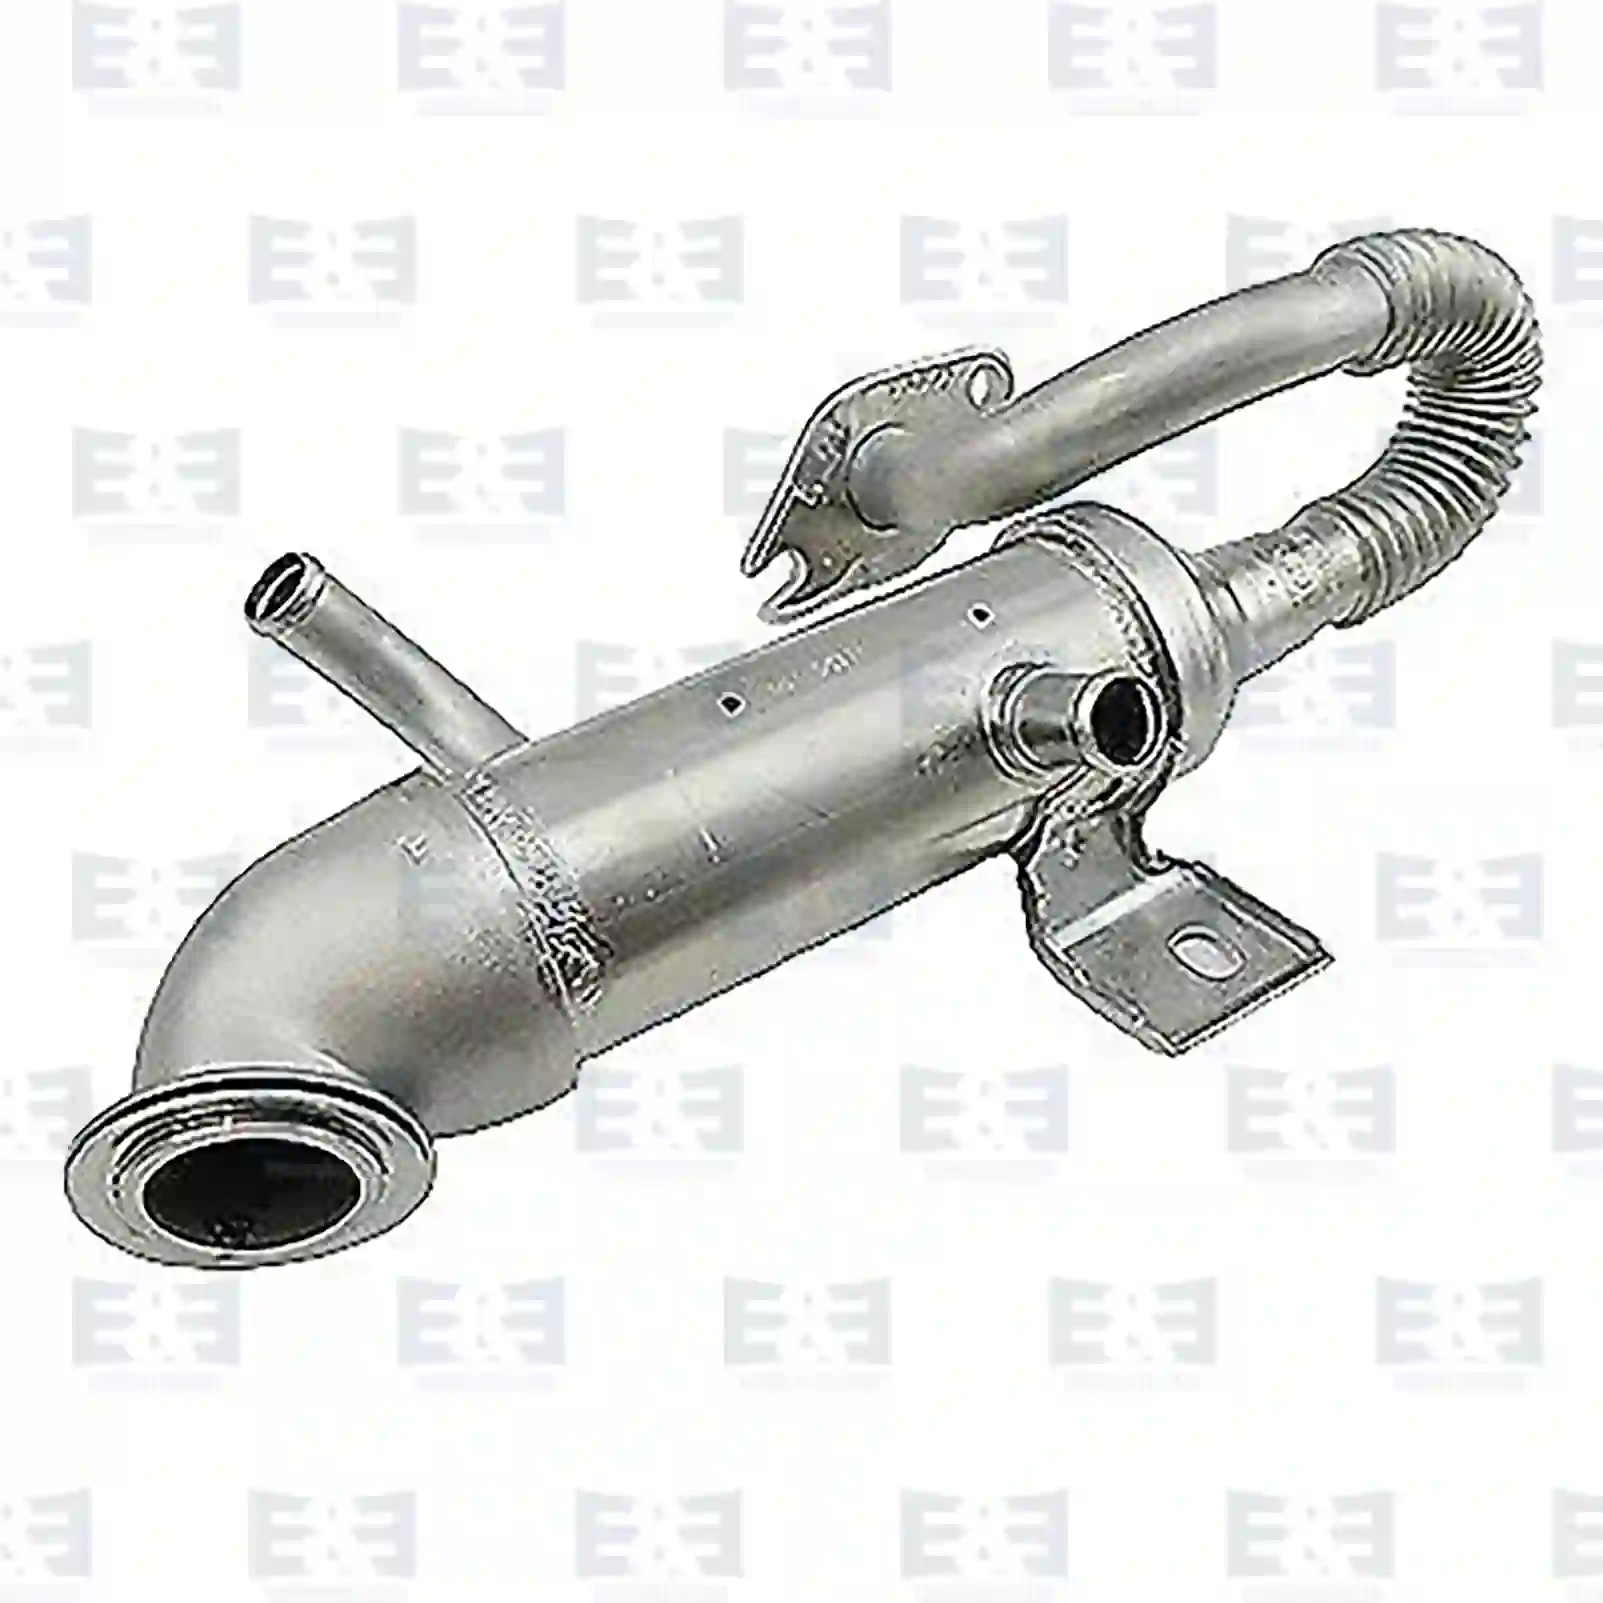  Exhaust gas recirculation module || E&E Truck Spare Parts | Truck Spare Parts, Auotomotive Spare Parts